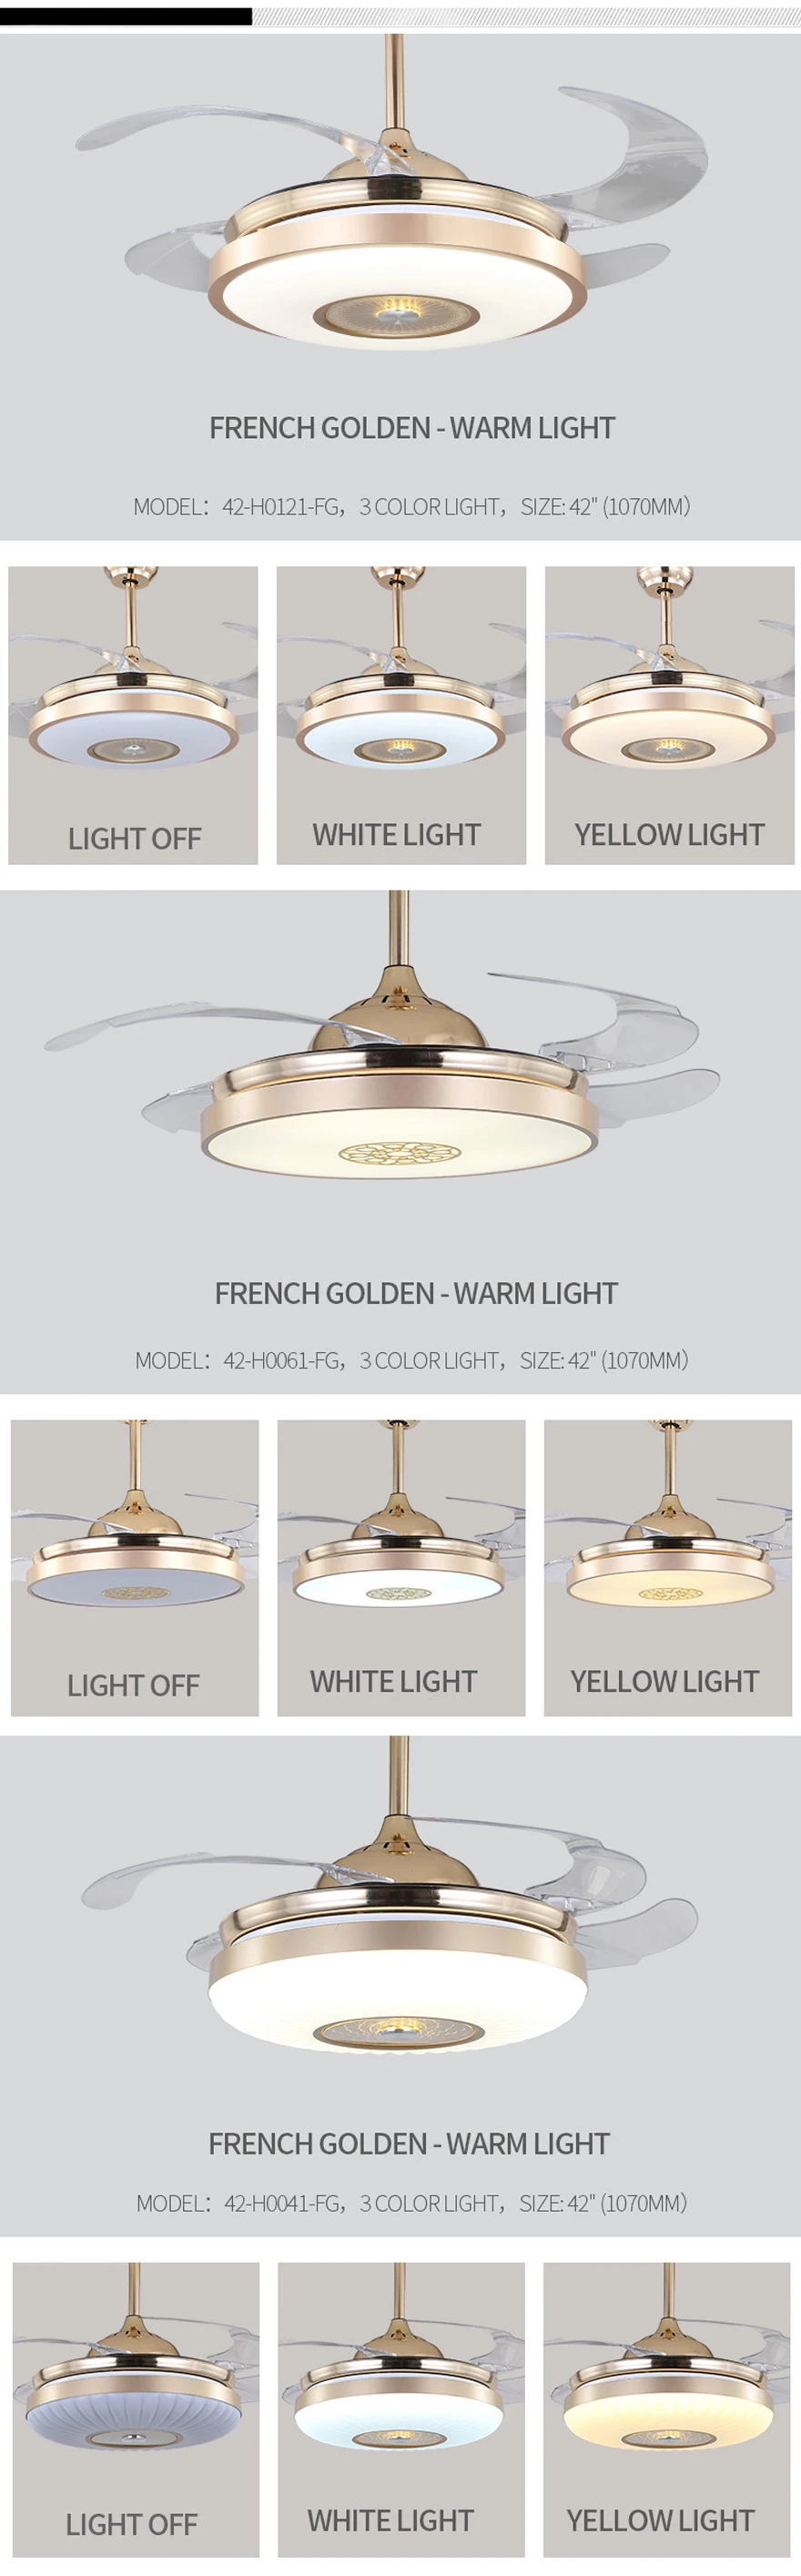 2017 Hot sell gold quality modern design hidden blades ceiling fans